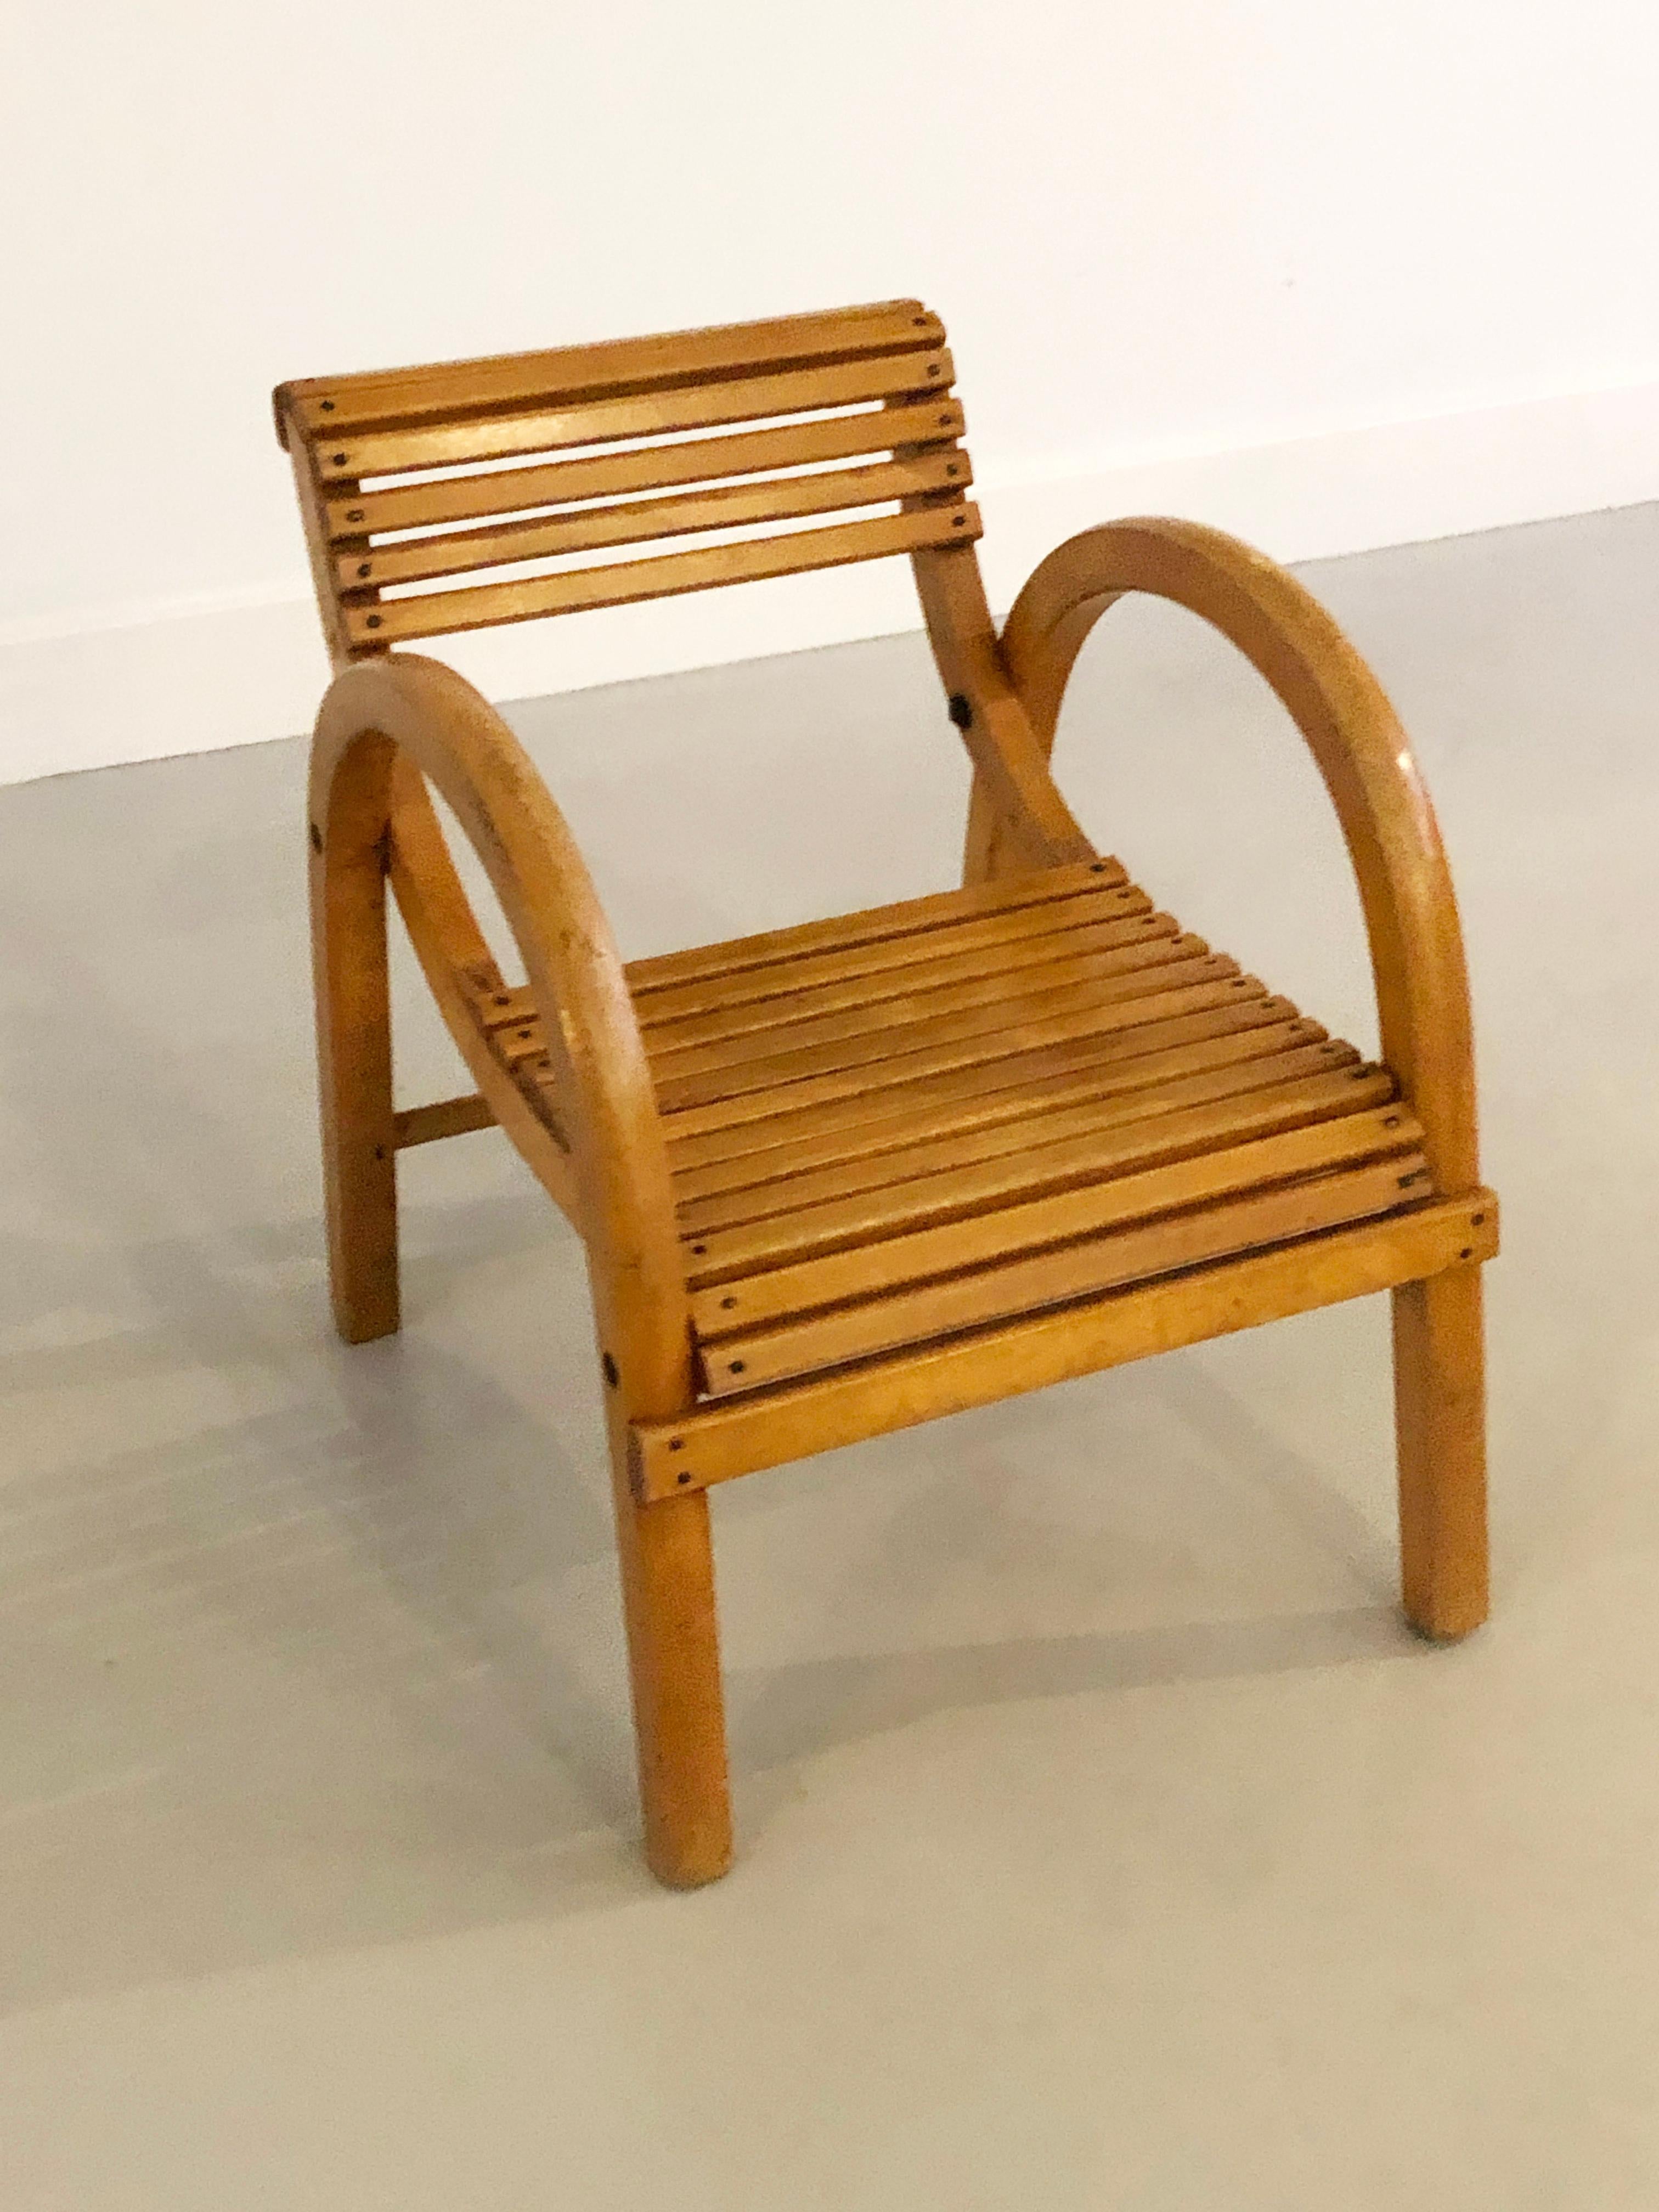 Woodwork Baumann children's armchair 1930s - French modernist design Bentwood chair For Sale